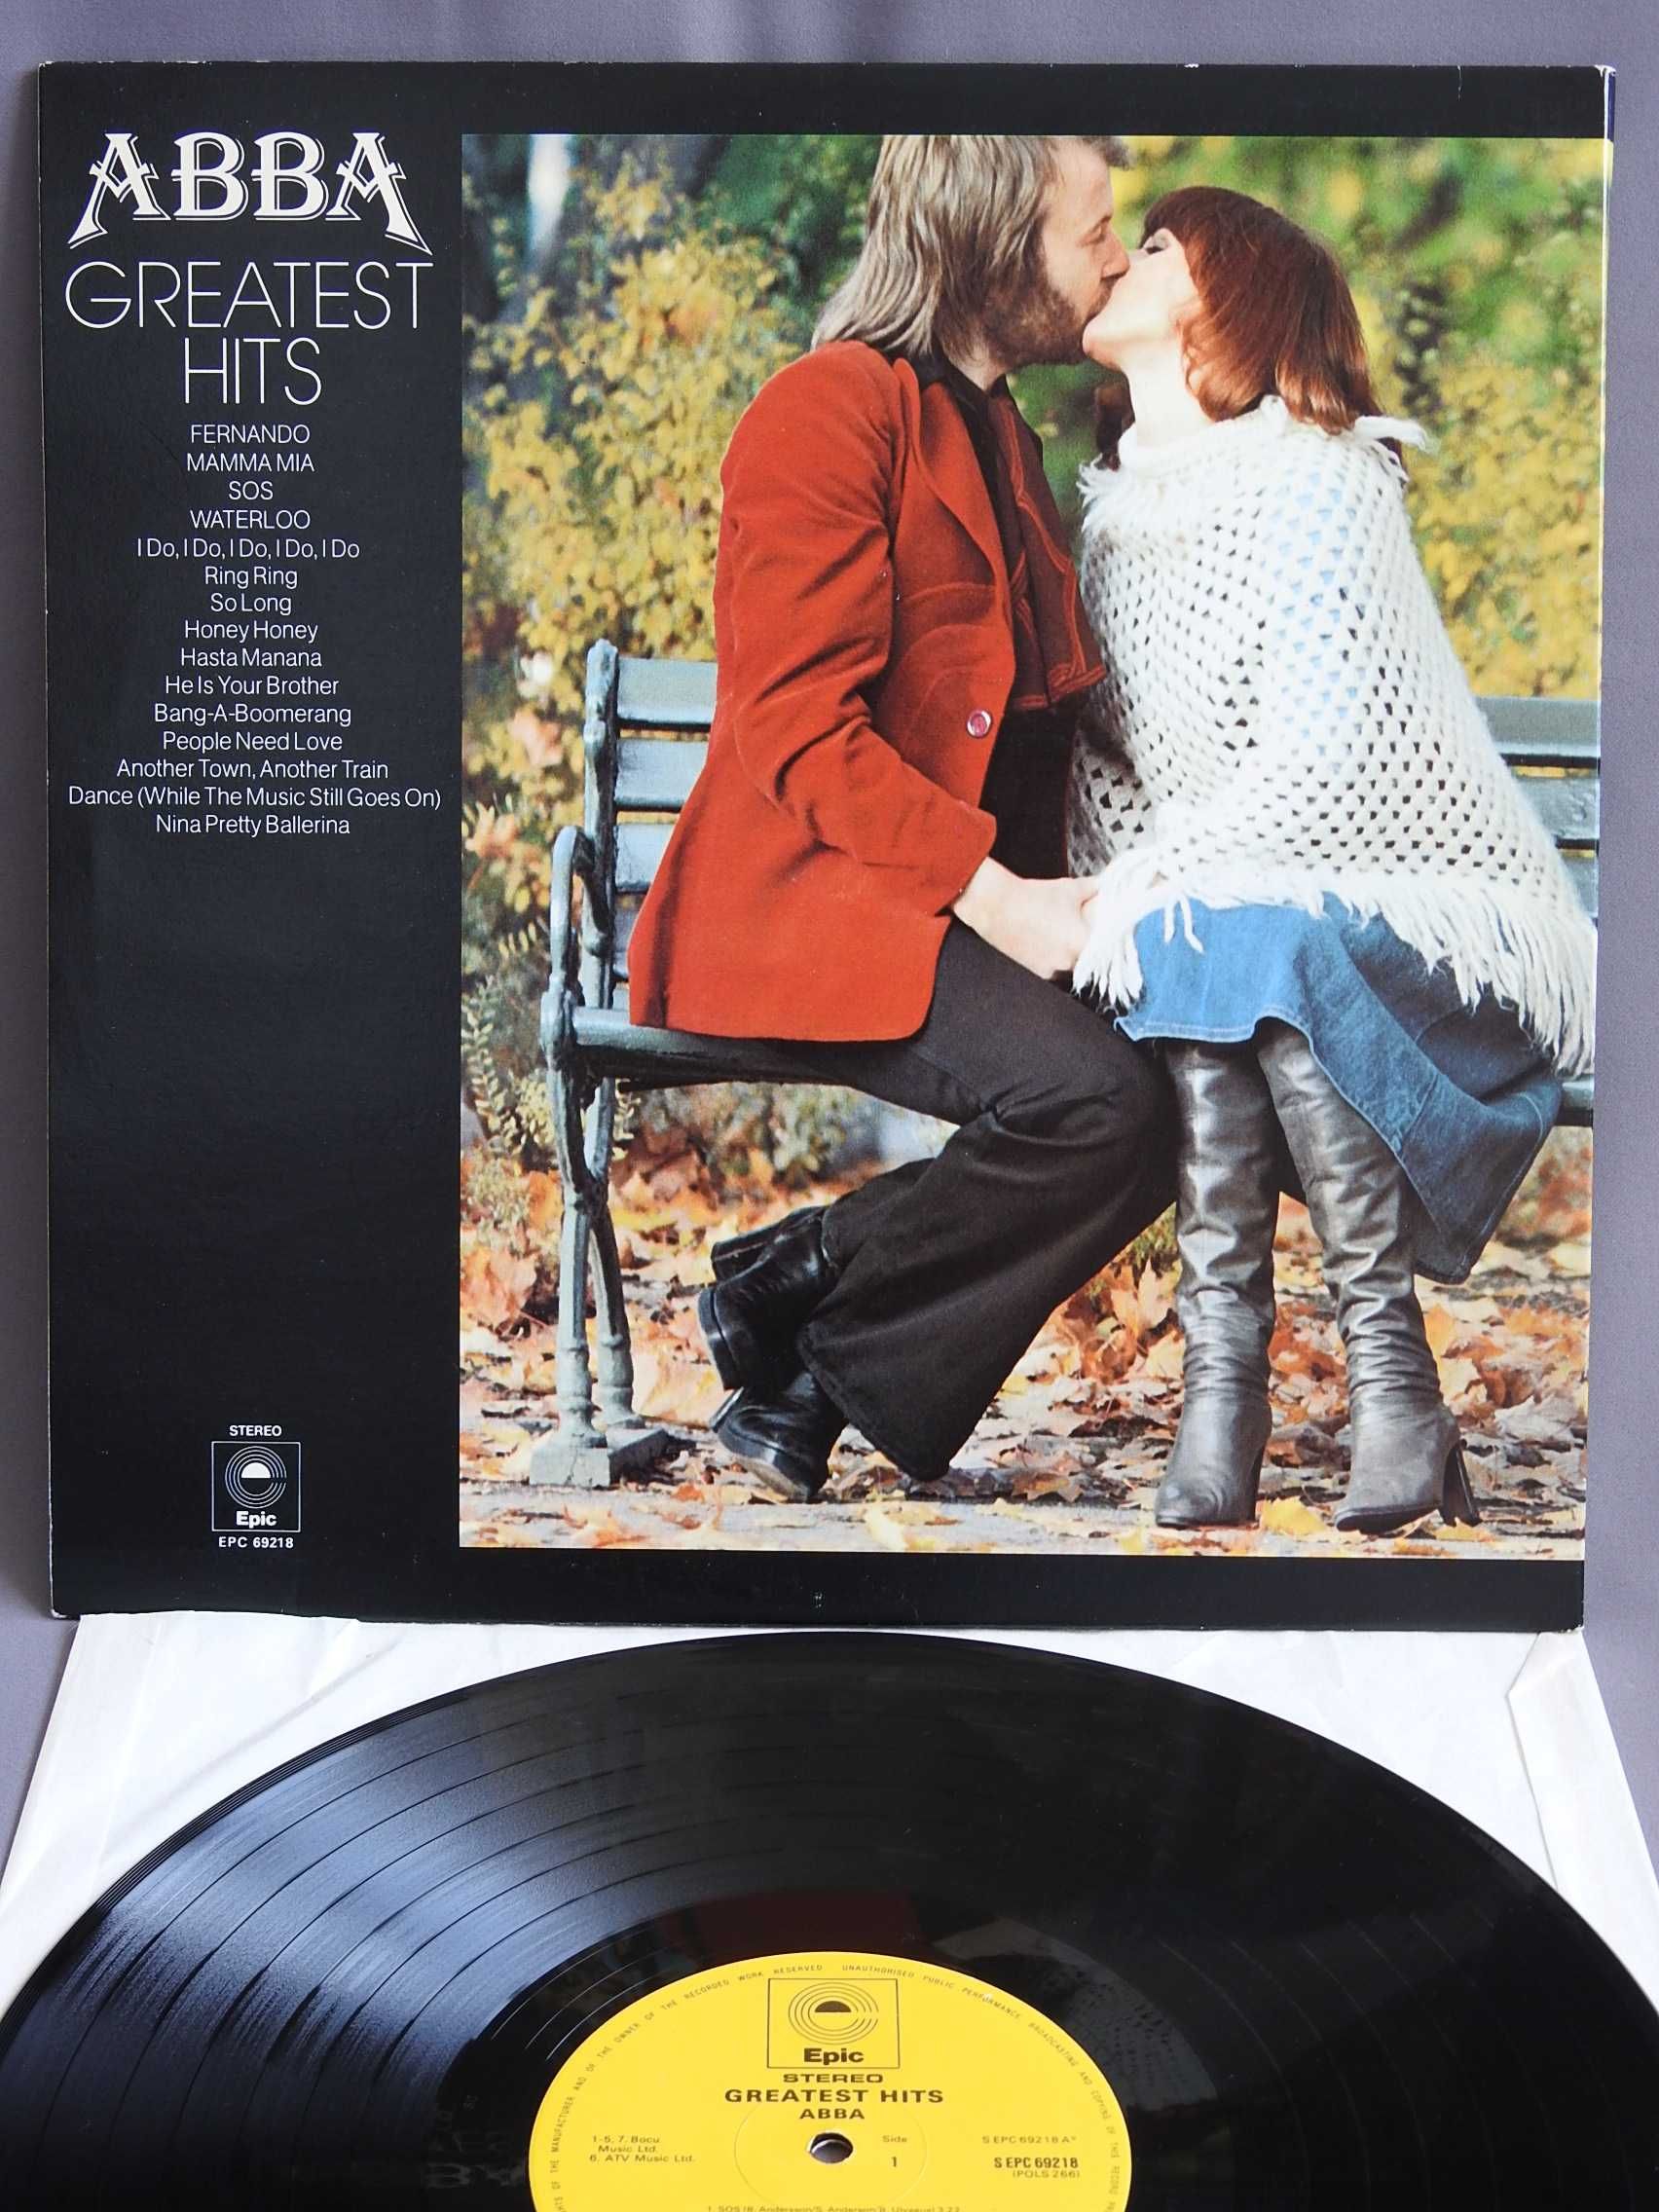 ABBA ‎Greatest Hits LP 1976 UK Epic пластинка Британия NM 1press ориги